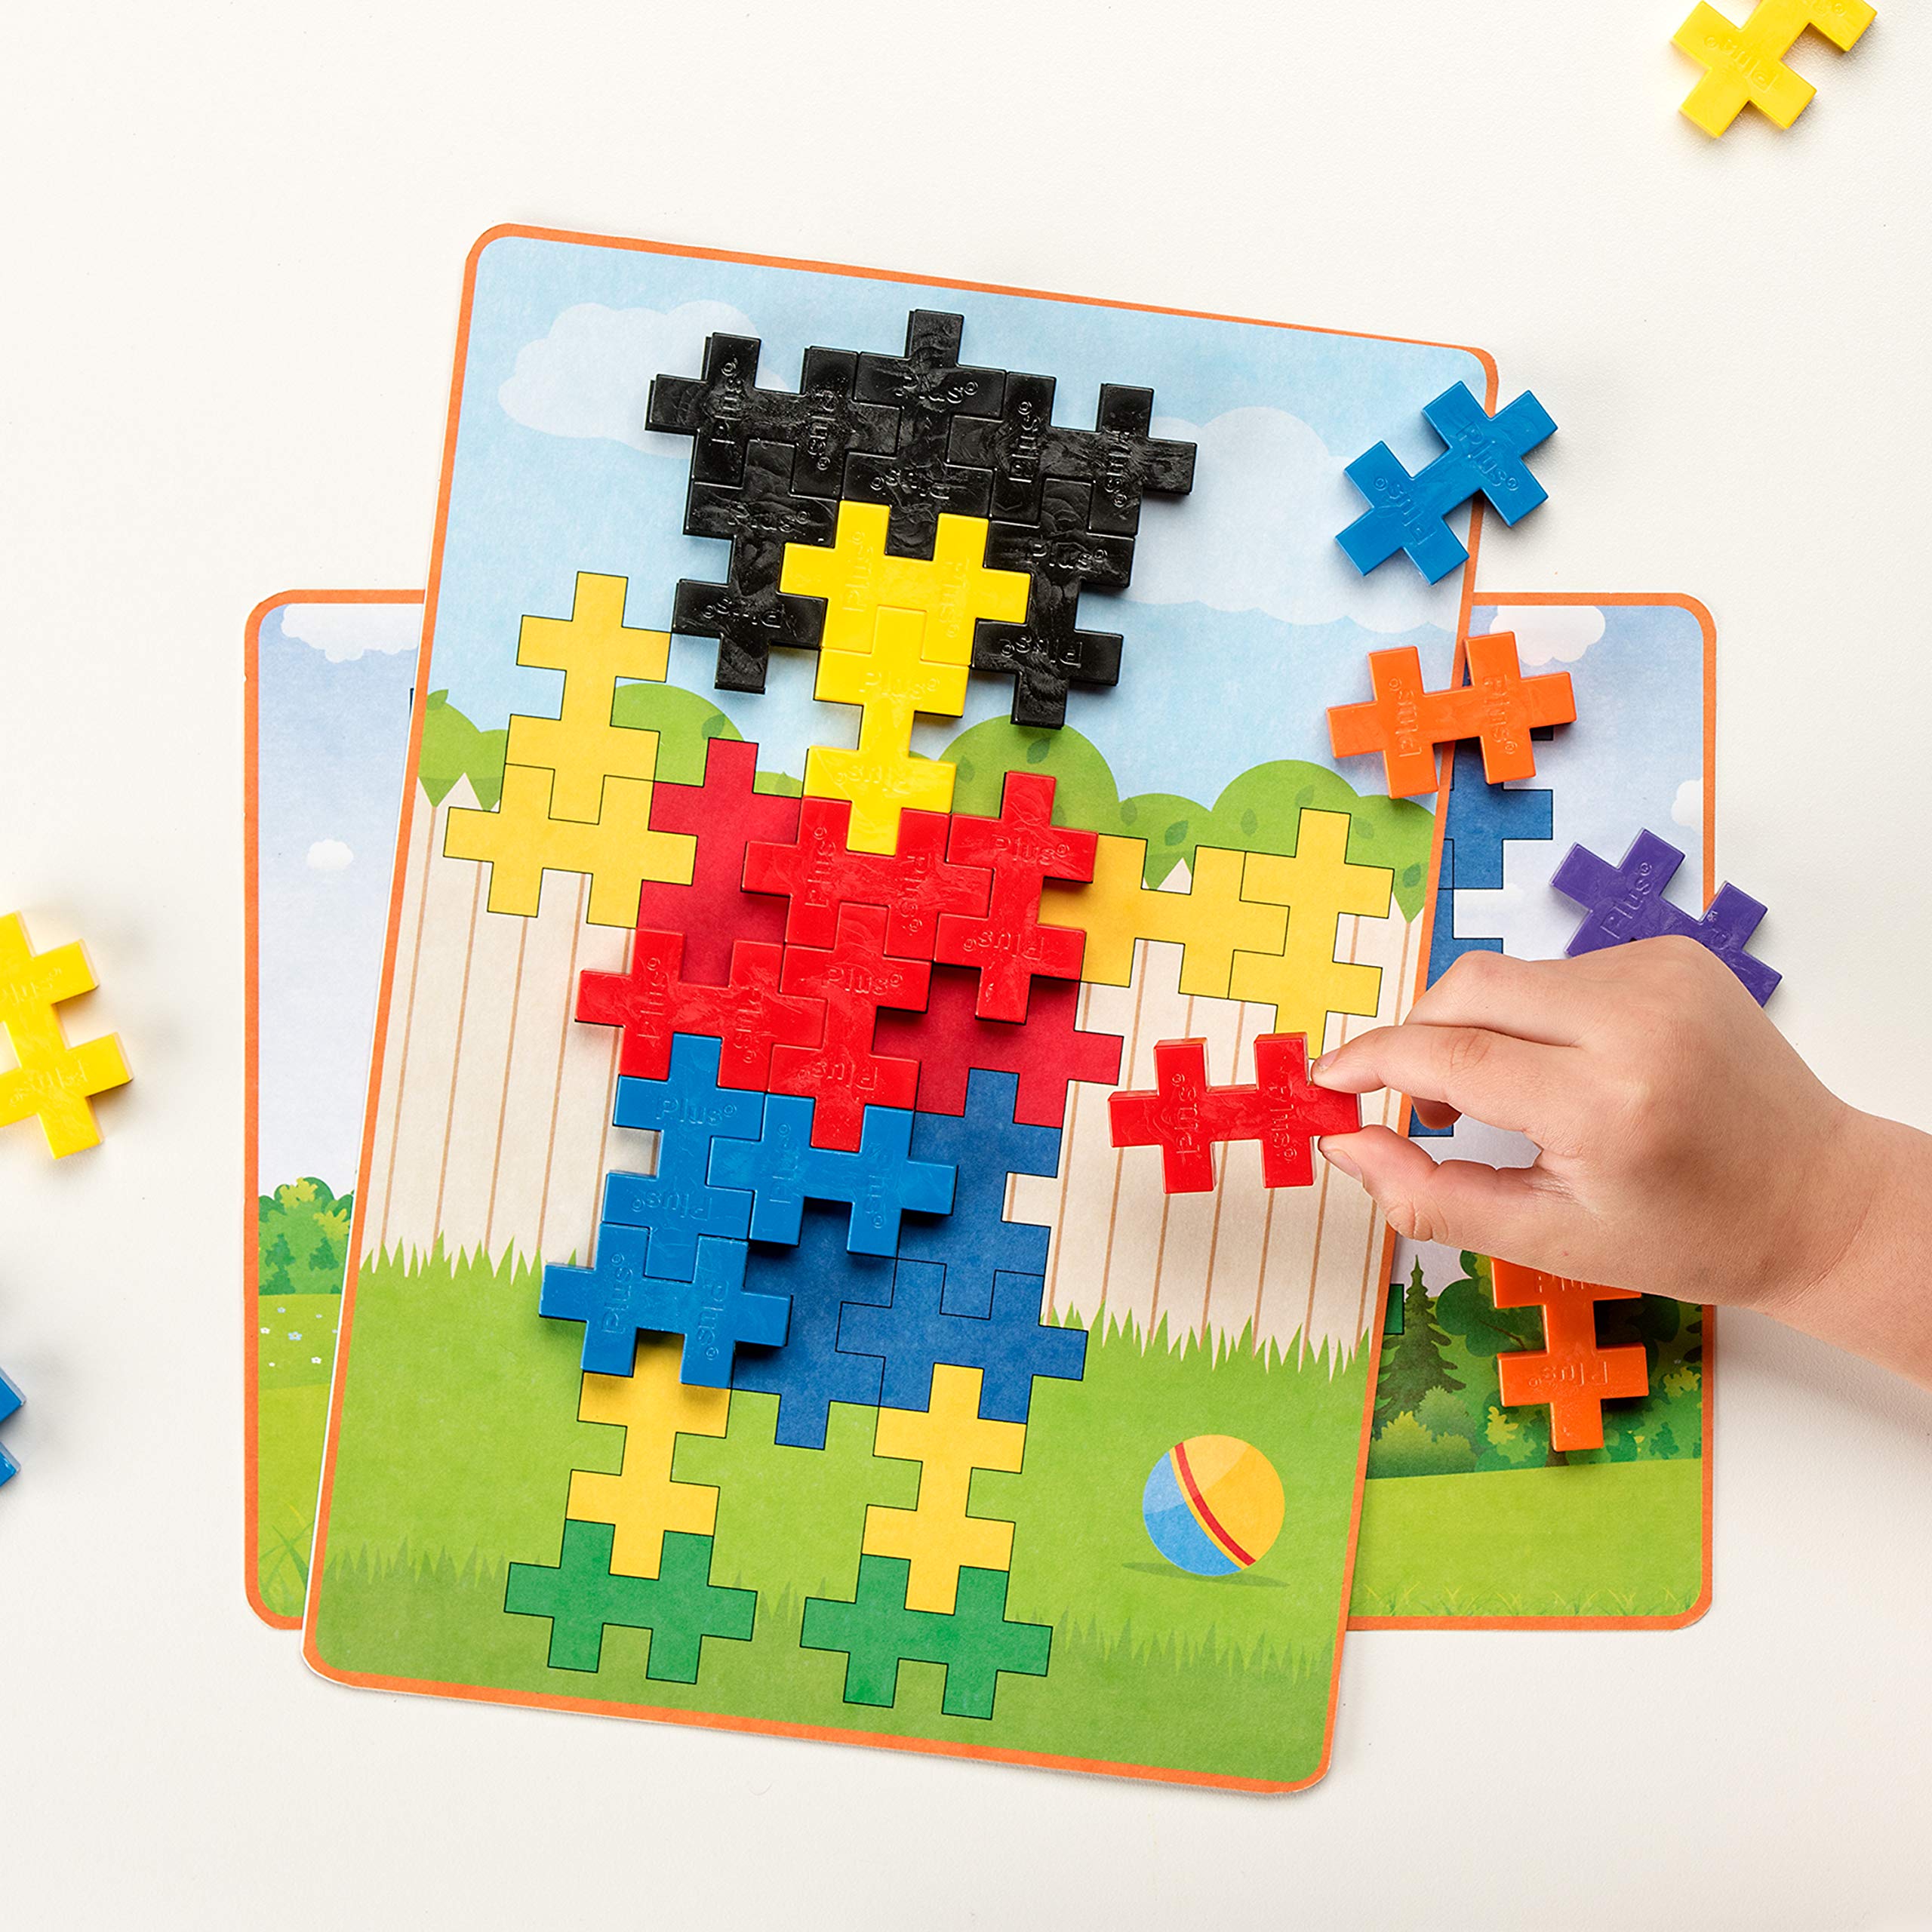 PLUS PLUS - BIG - BIG Picture Puzzles, Basic Color Mix - Construction Building Stem Toy, Interlocking Large Puzzle Blocks for Toddlers and Preschool